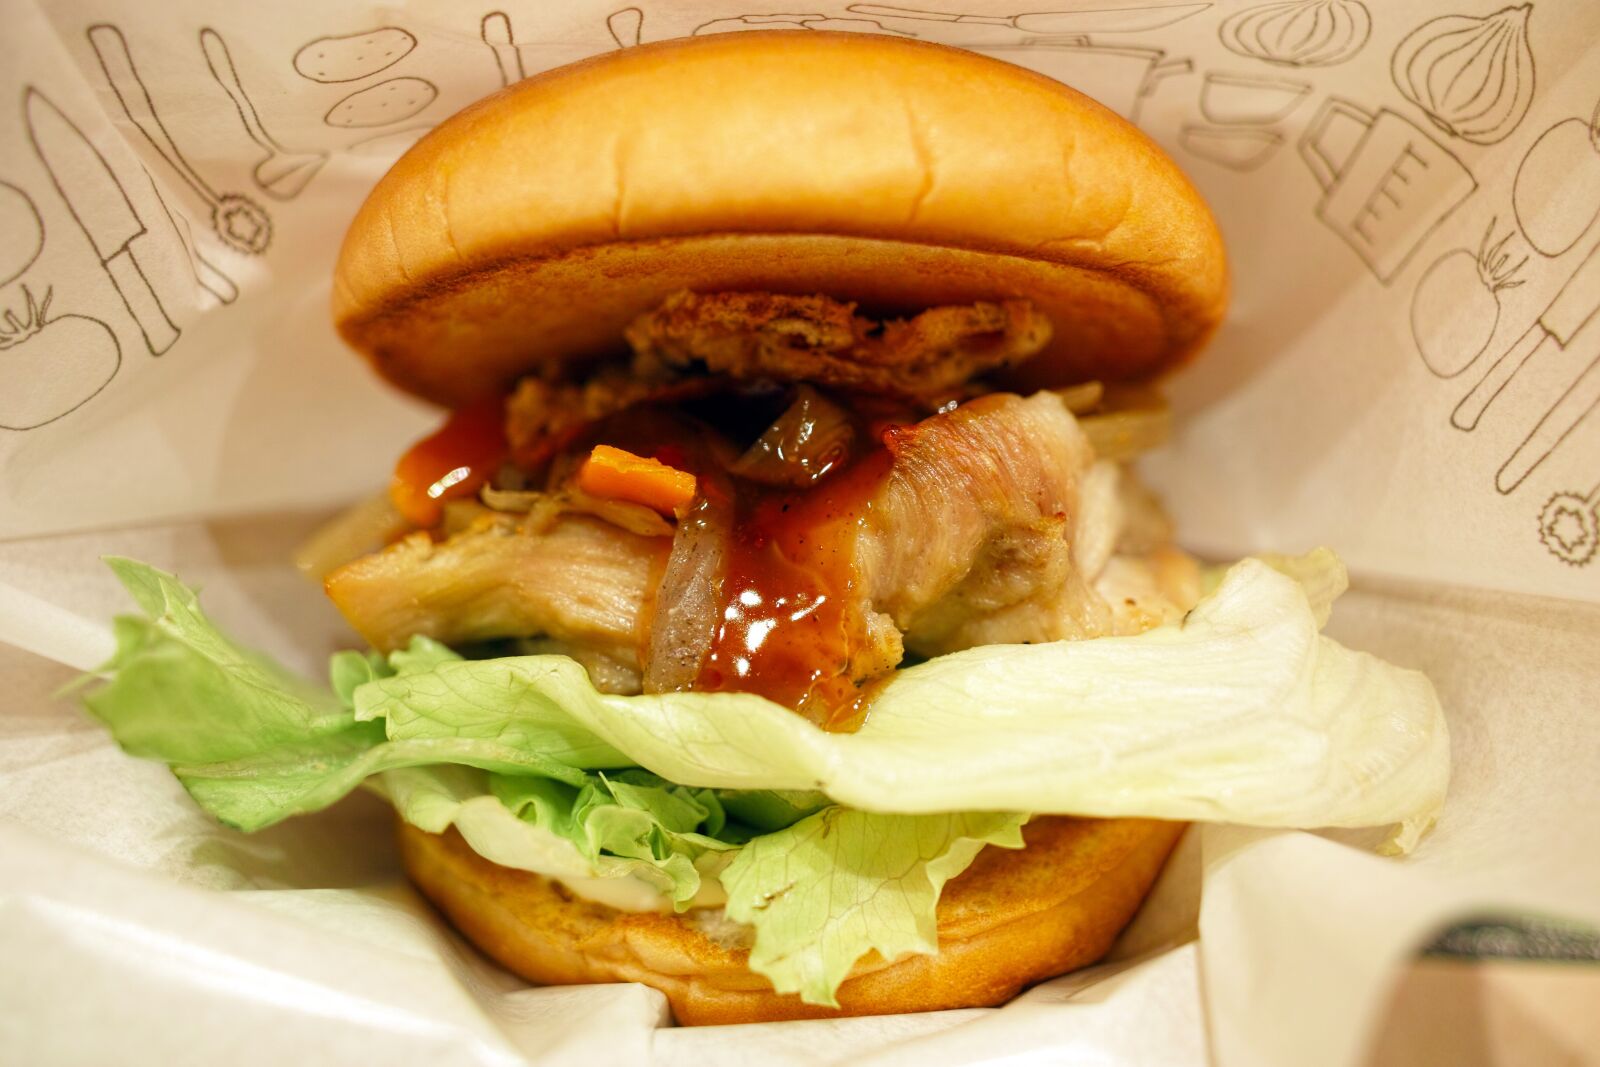 Sigma DP1 Merrill sample photo. Food, restaurant, burger photography